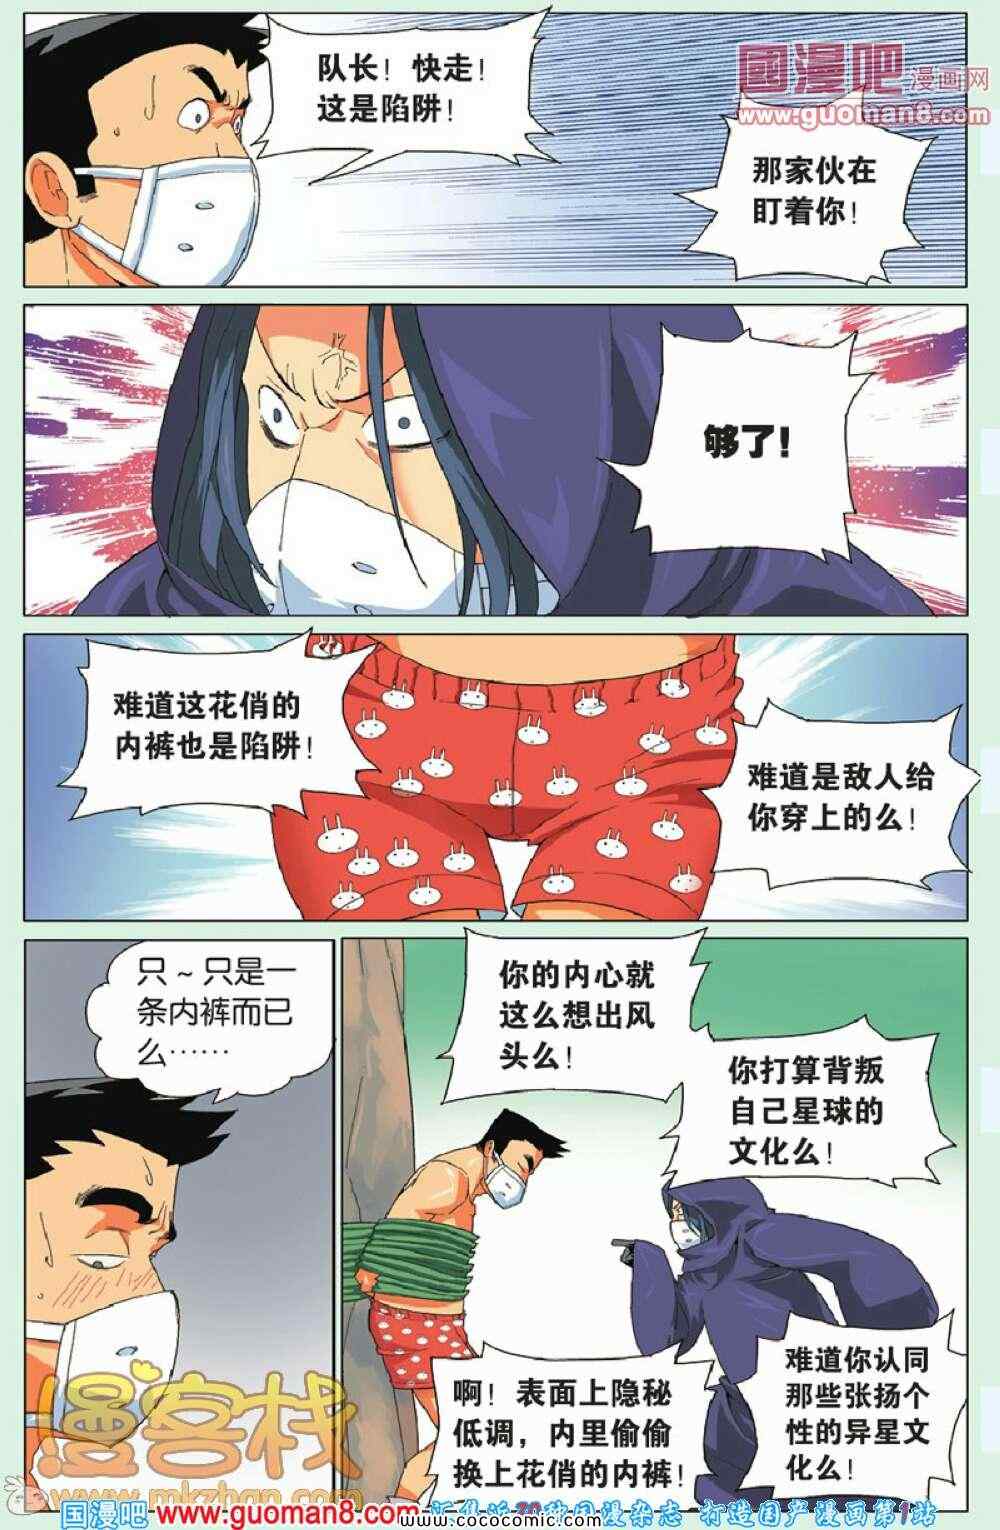 《PORJECT大爱》漫画 016集